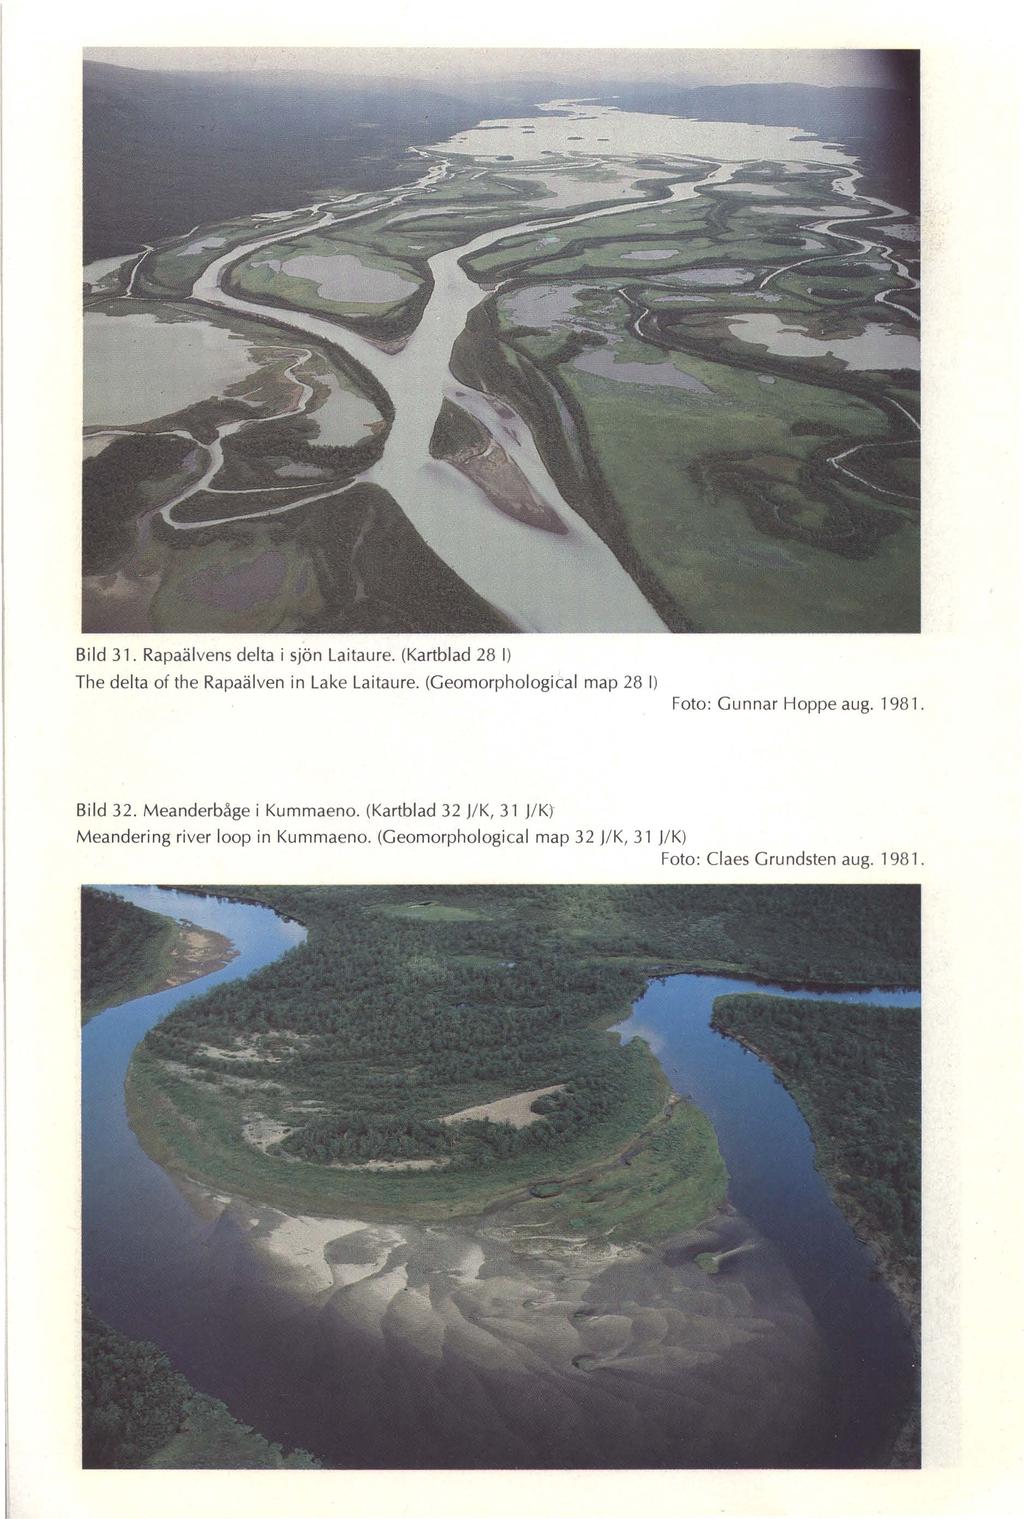 Bild 31. Rapaäl vens delta i sjön Laitaure. (Kartblad 28 I) The delta of the Rapaälven in Lake Laitaure. (Geomorphological map 28 I) Foto: Gunnar Hoppe aug. 1981.